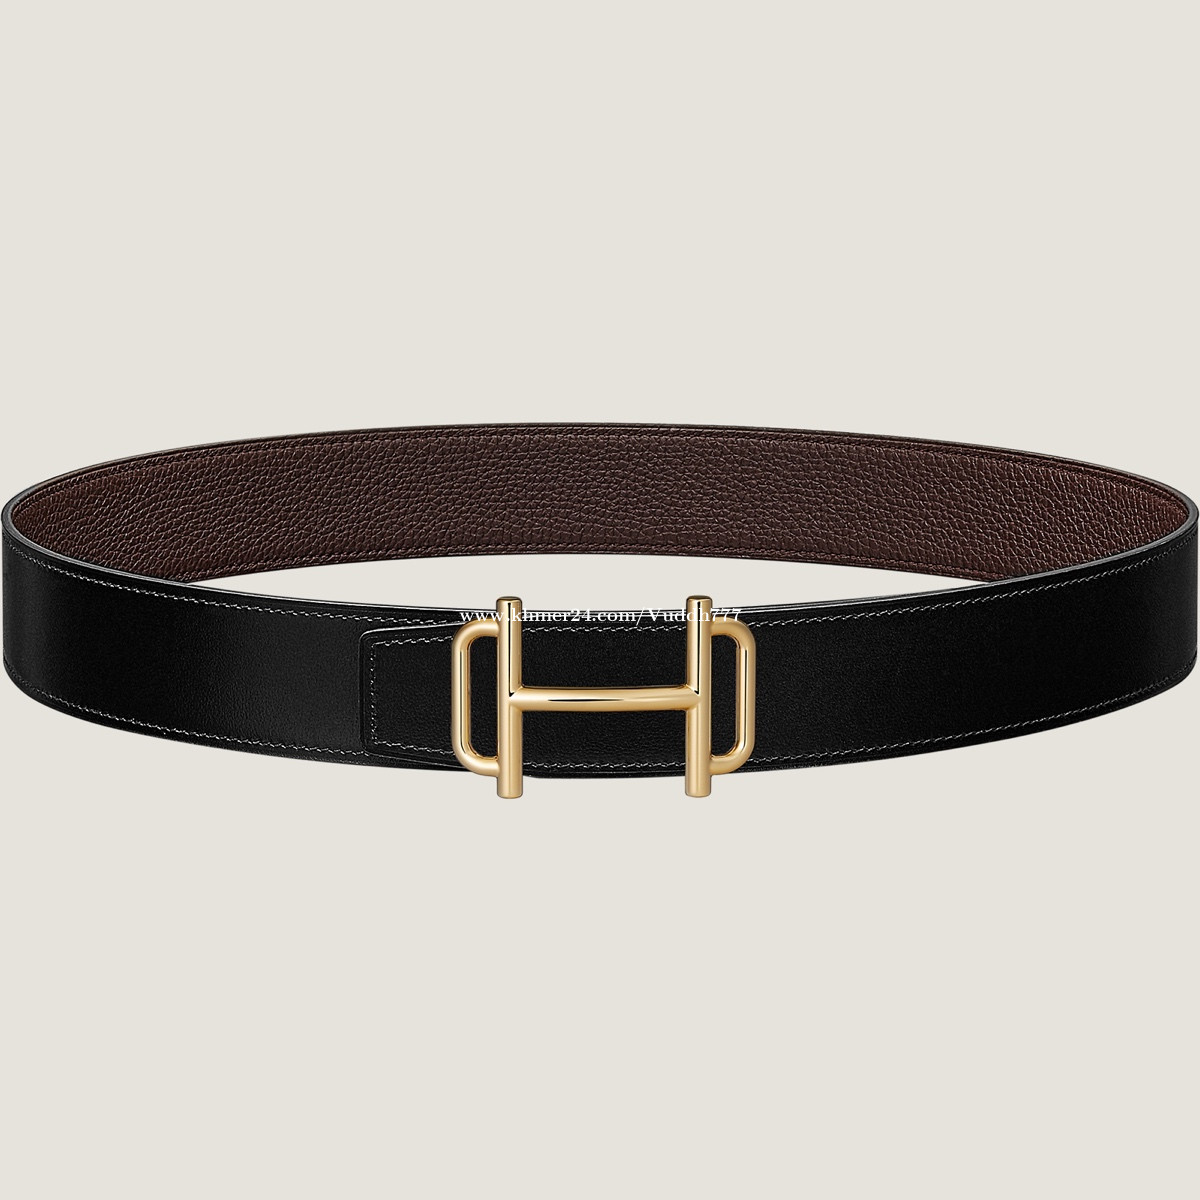 Royal belt buckle & Reversible leather strap 38 mm